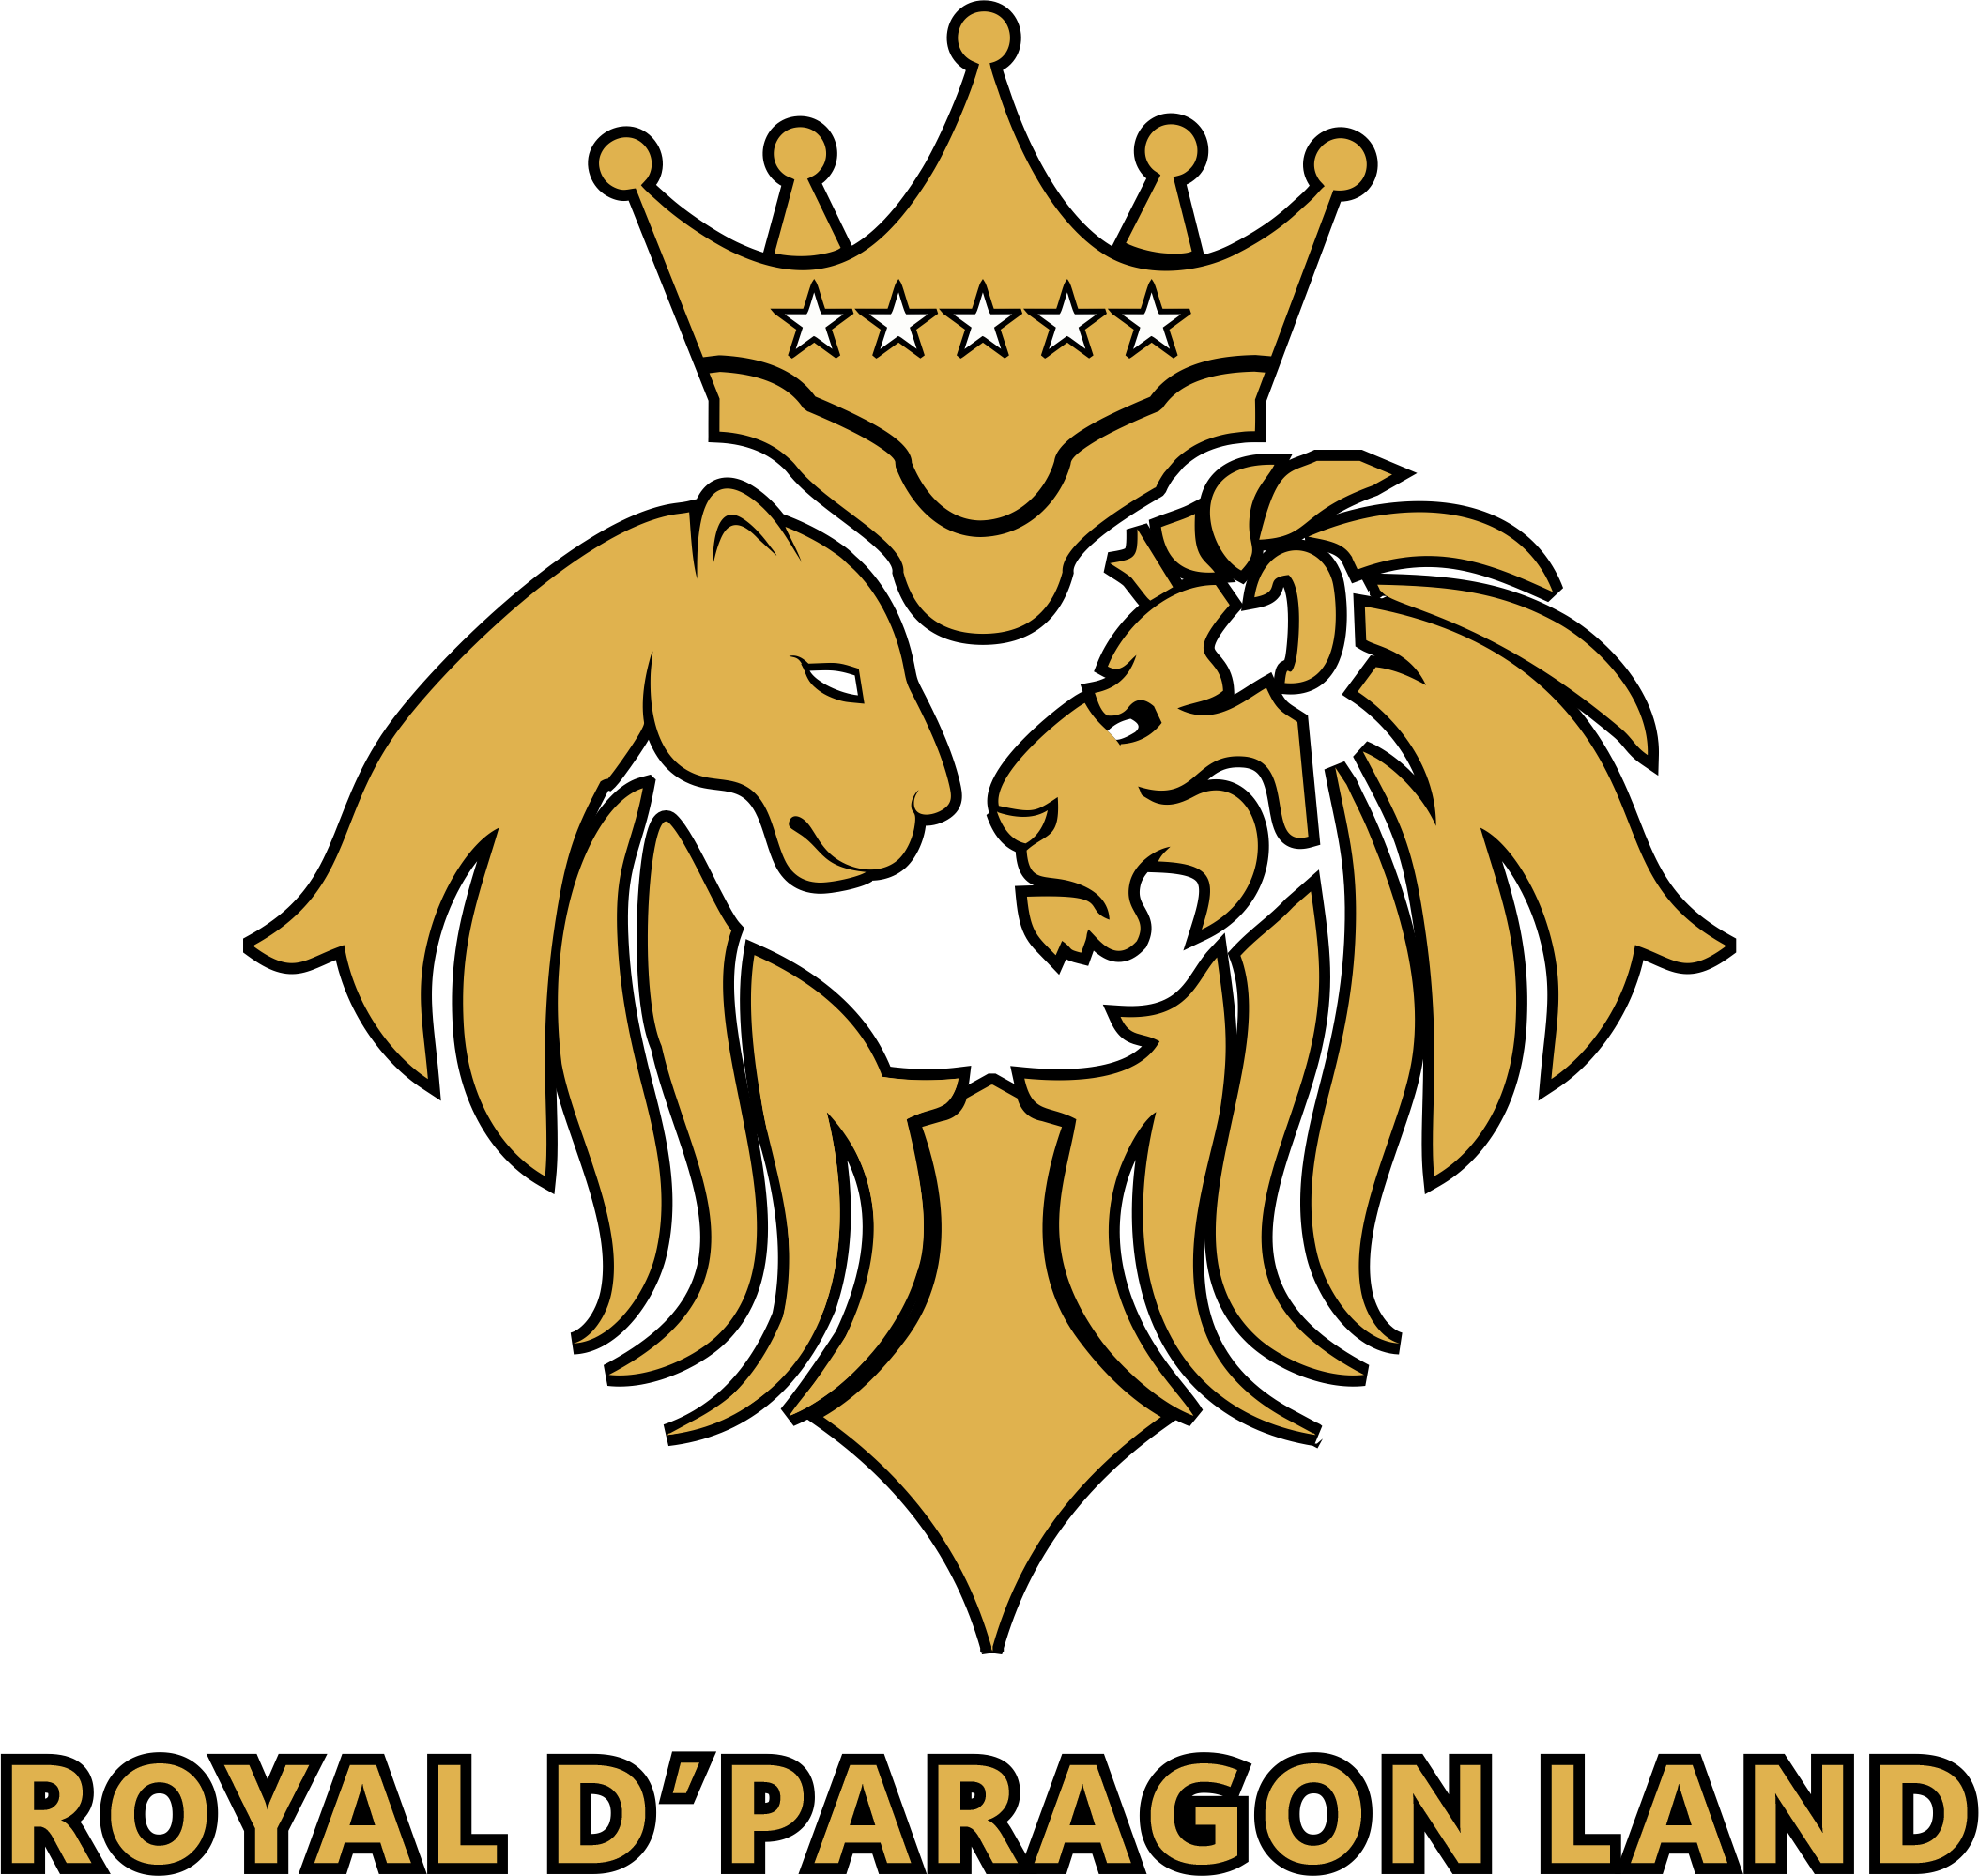 Royal D'paragon Land